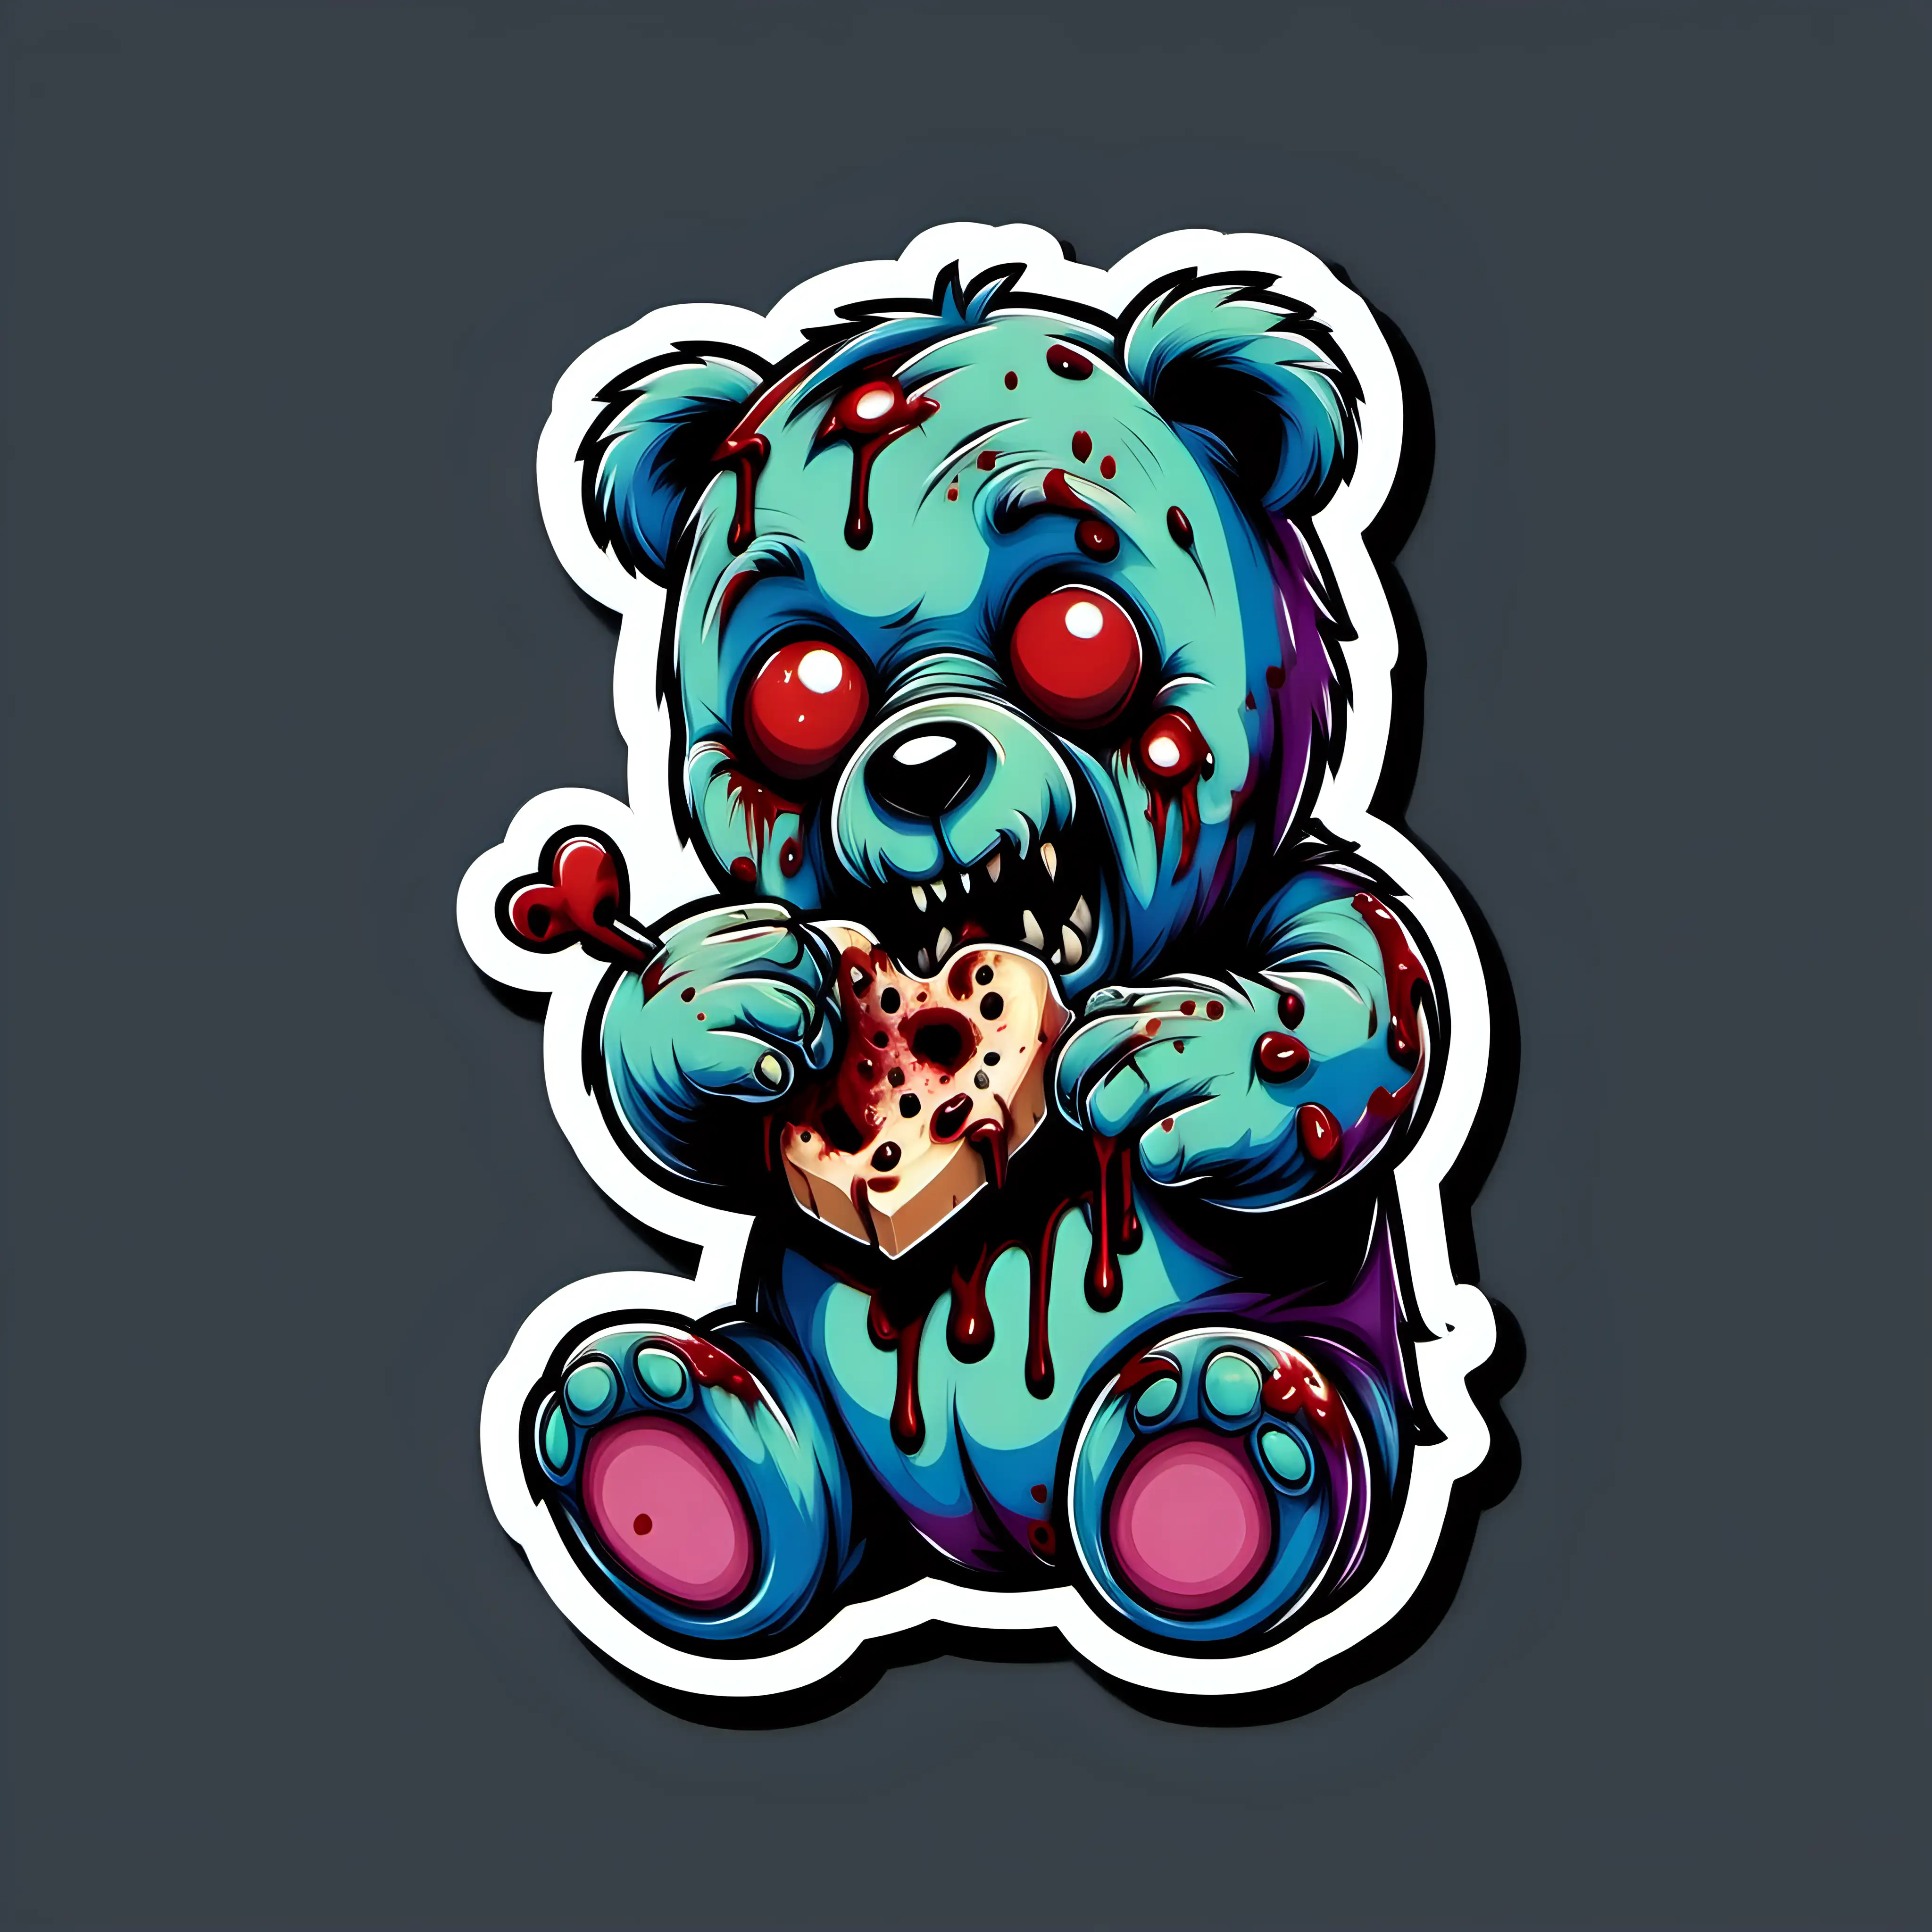 zombie teddy bear eating a carebear, sticker. make adobe illustrator image trace friendly.